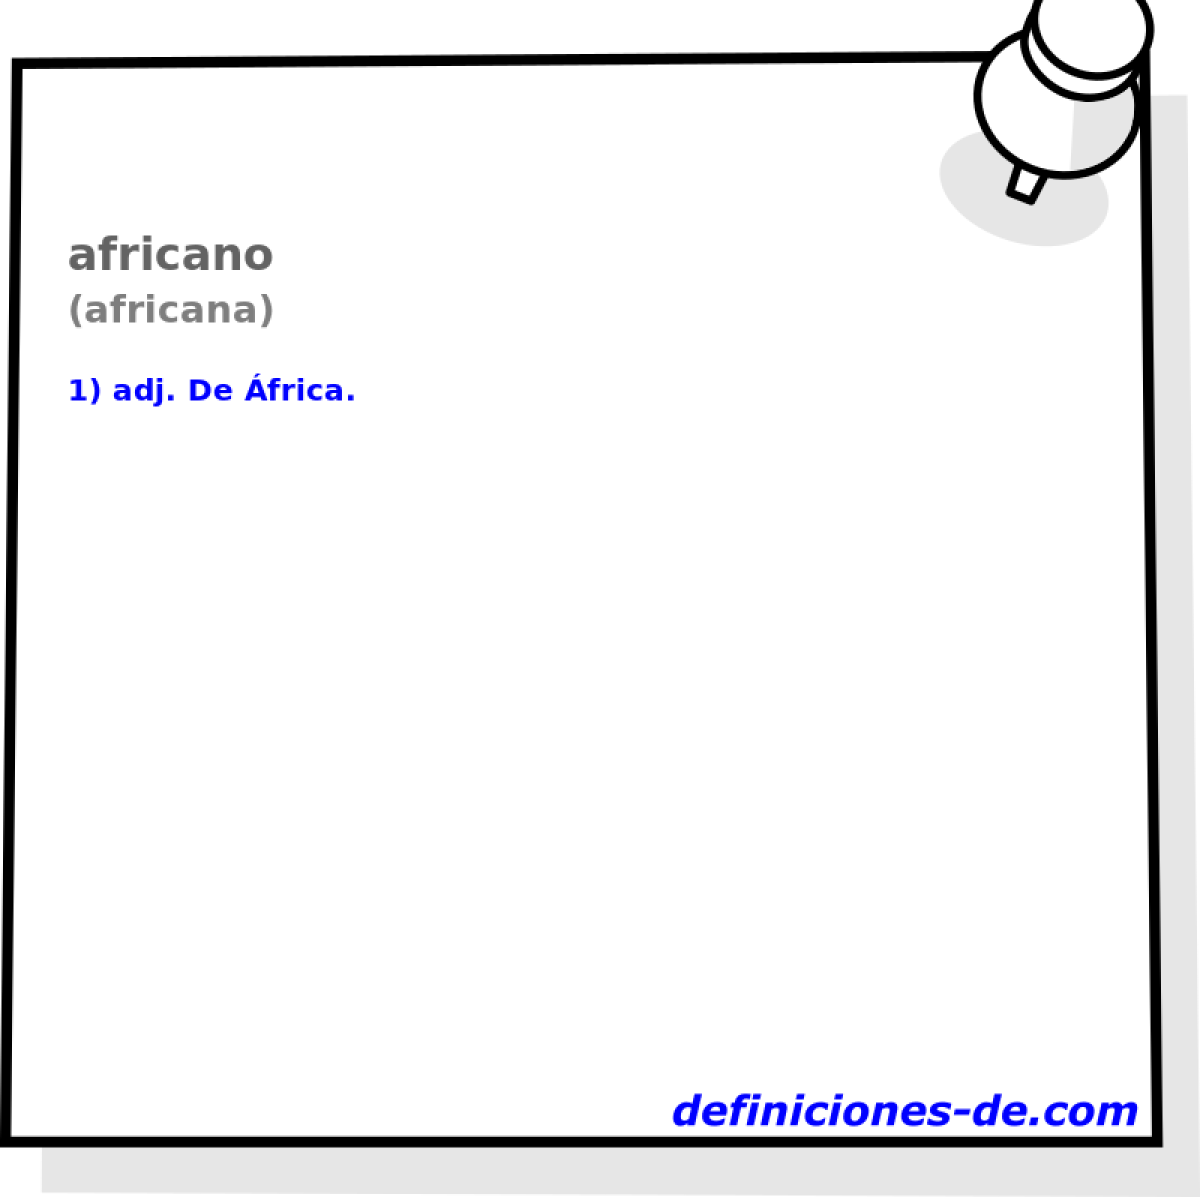 africano (africana)